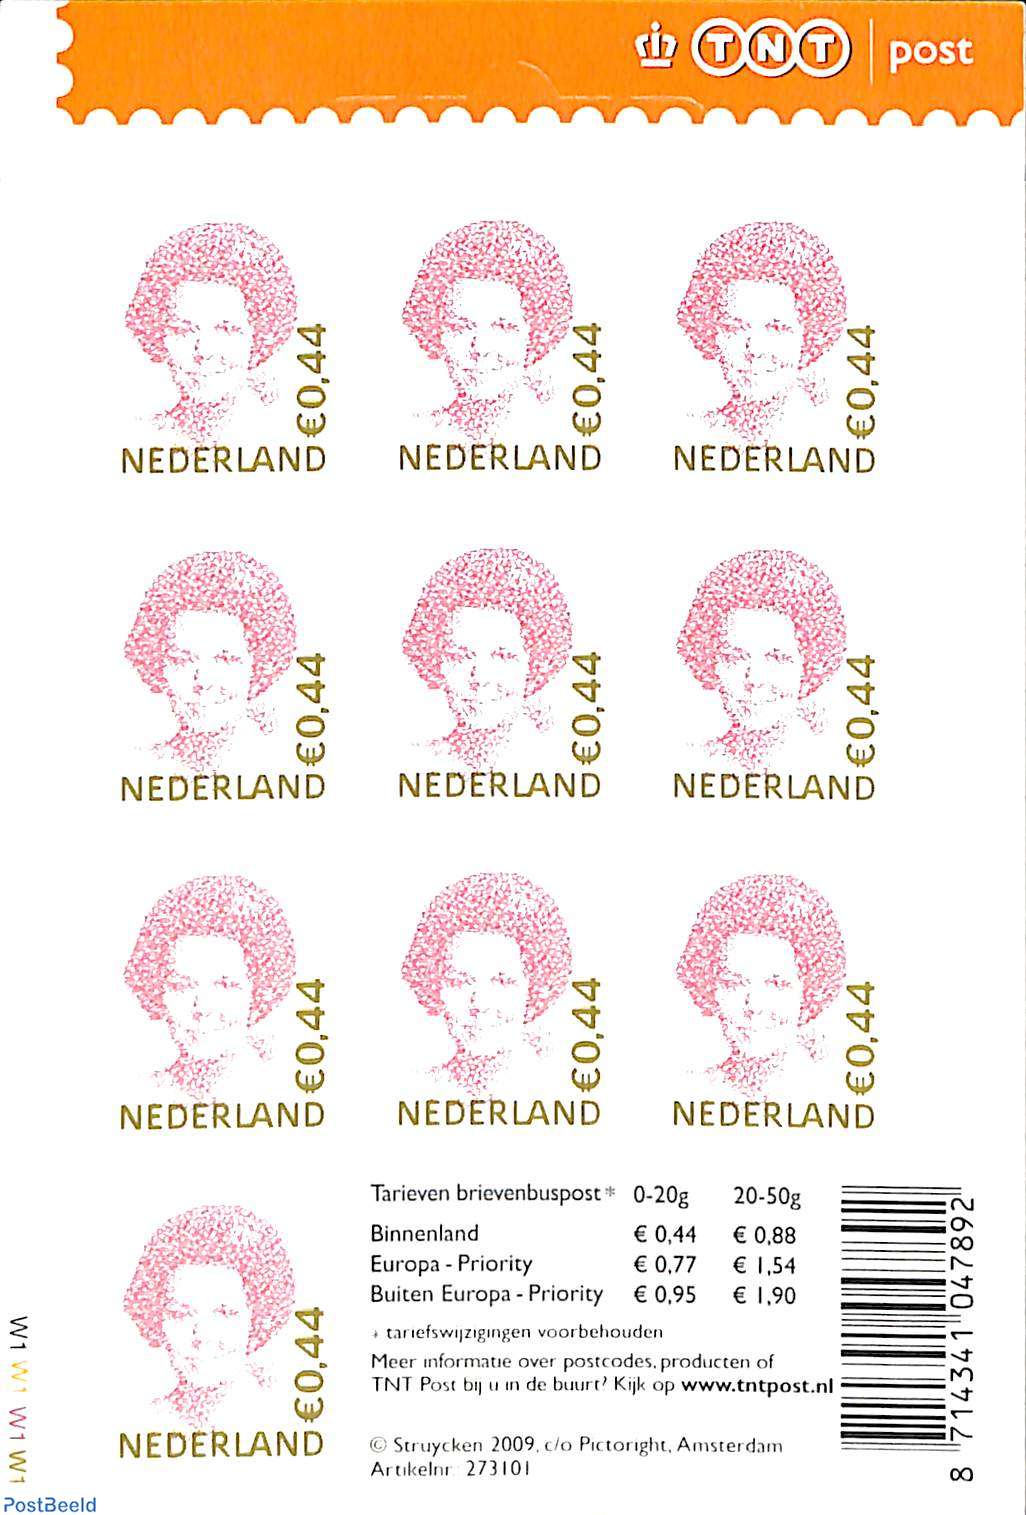 moreel zak winkelwagen Stamp 2006, Netherlands Beatrix 10x 0.44 foil sheet TNT logo, normal perf.,  close hanging eye, 2006 - Collecting Stamps - PostBeeld - Online Stamp Shop  - Collecting